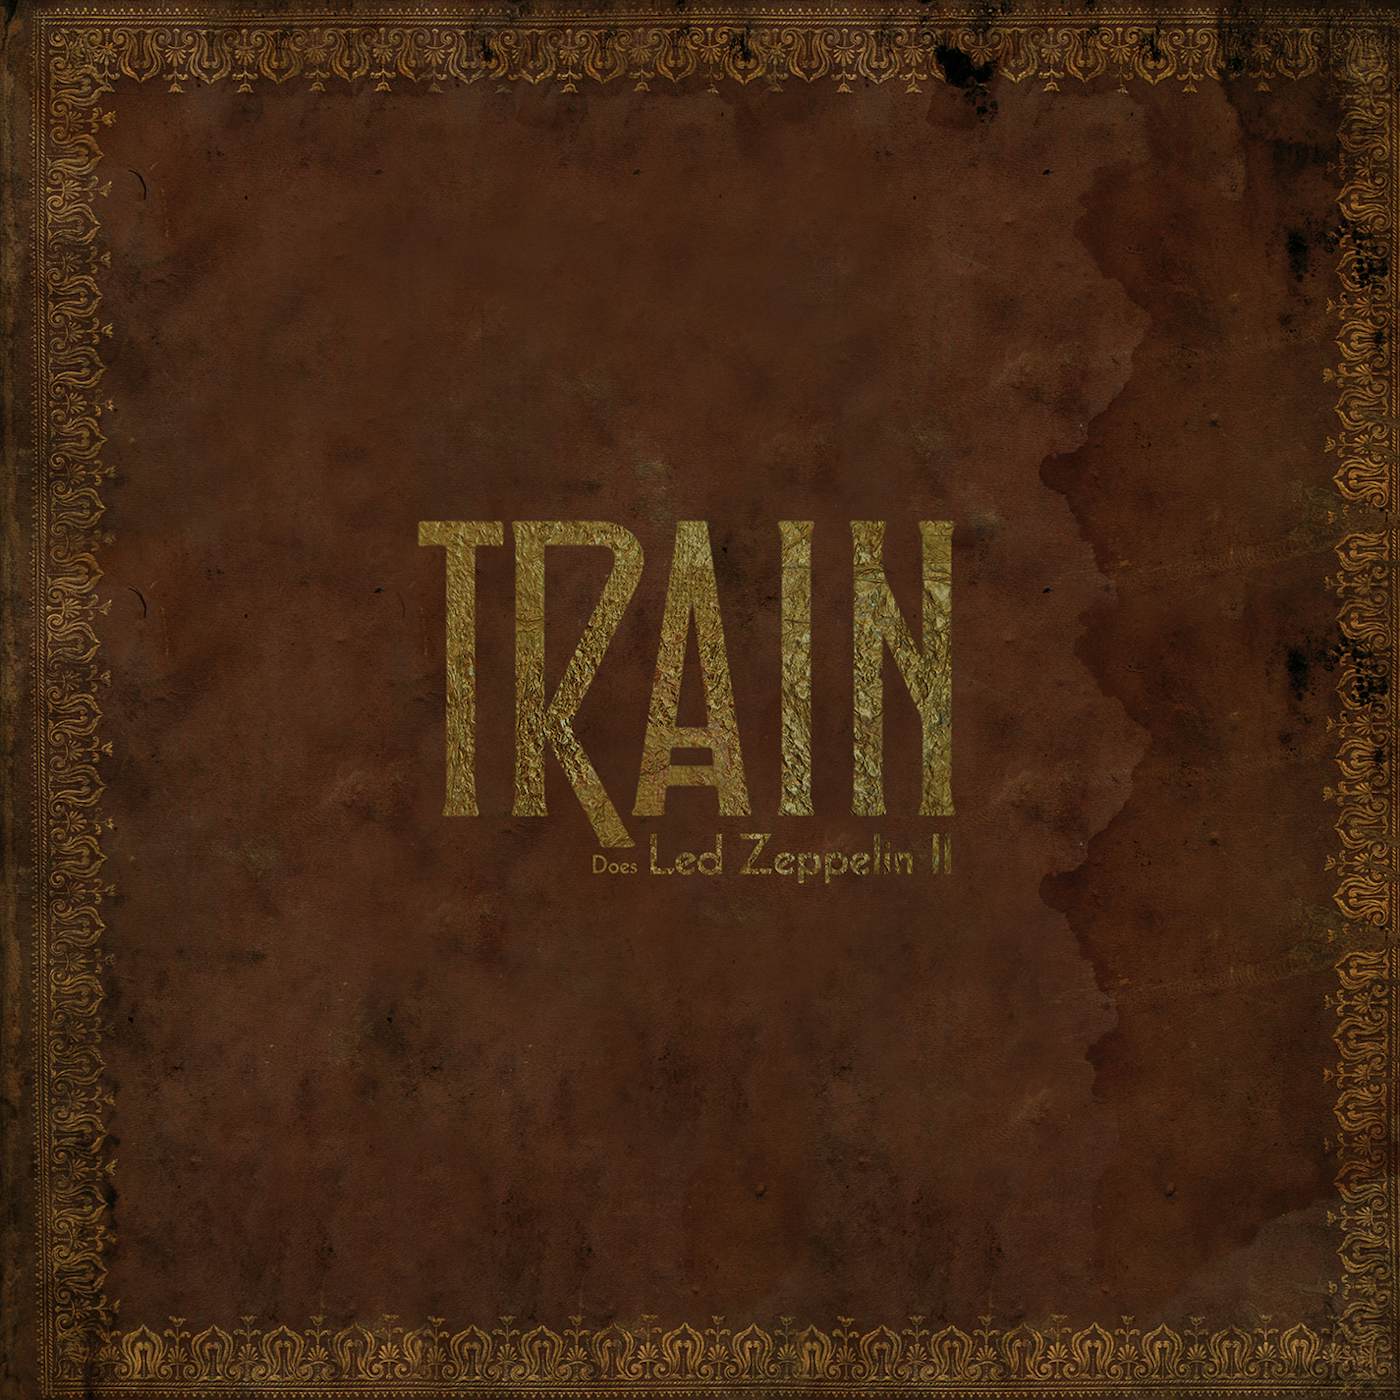 Train Does Led Zeppelin II Vinyl Record